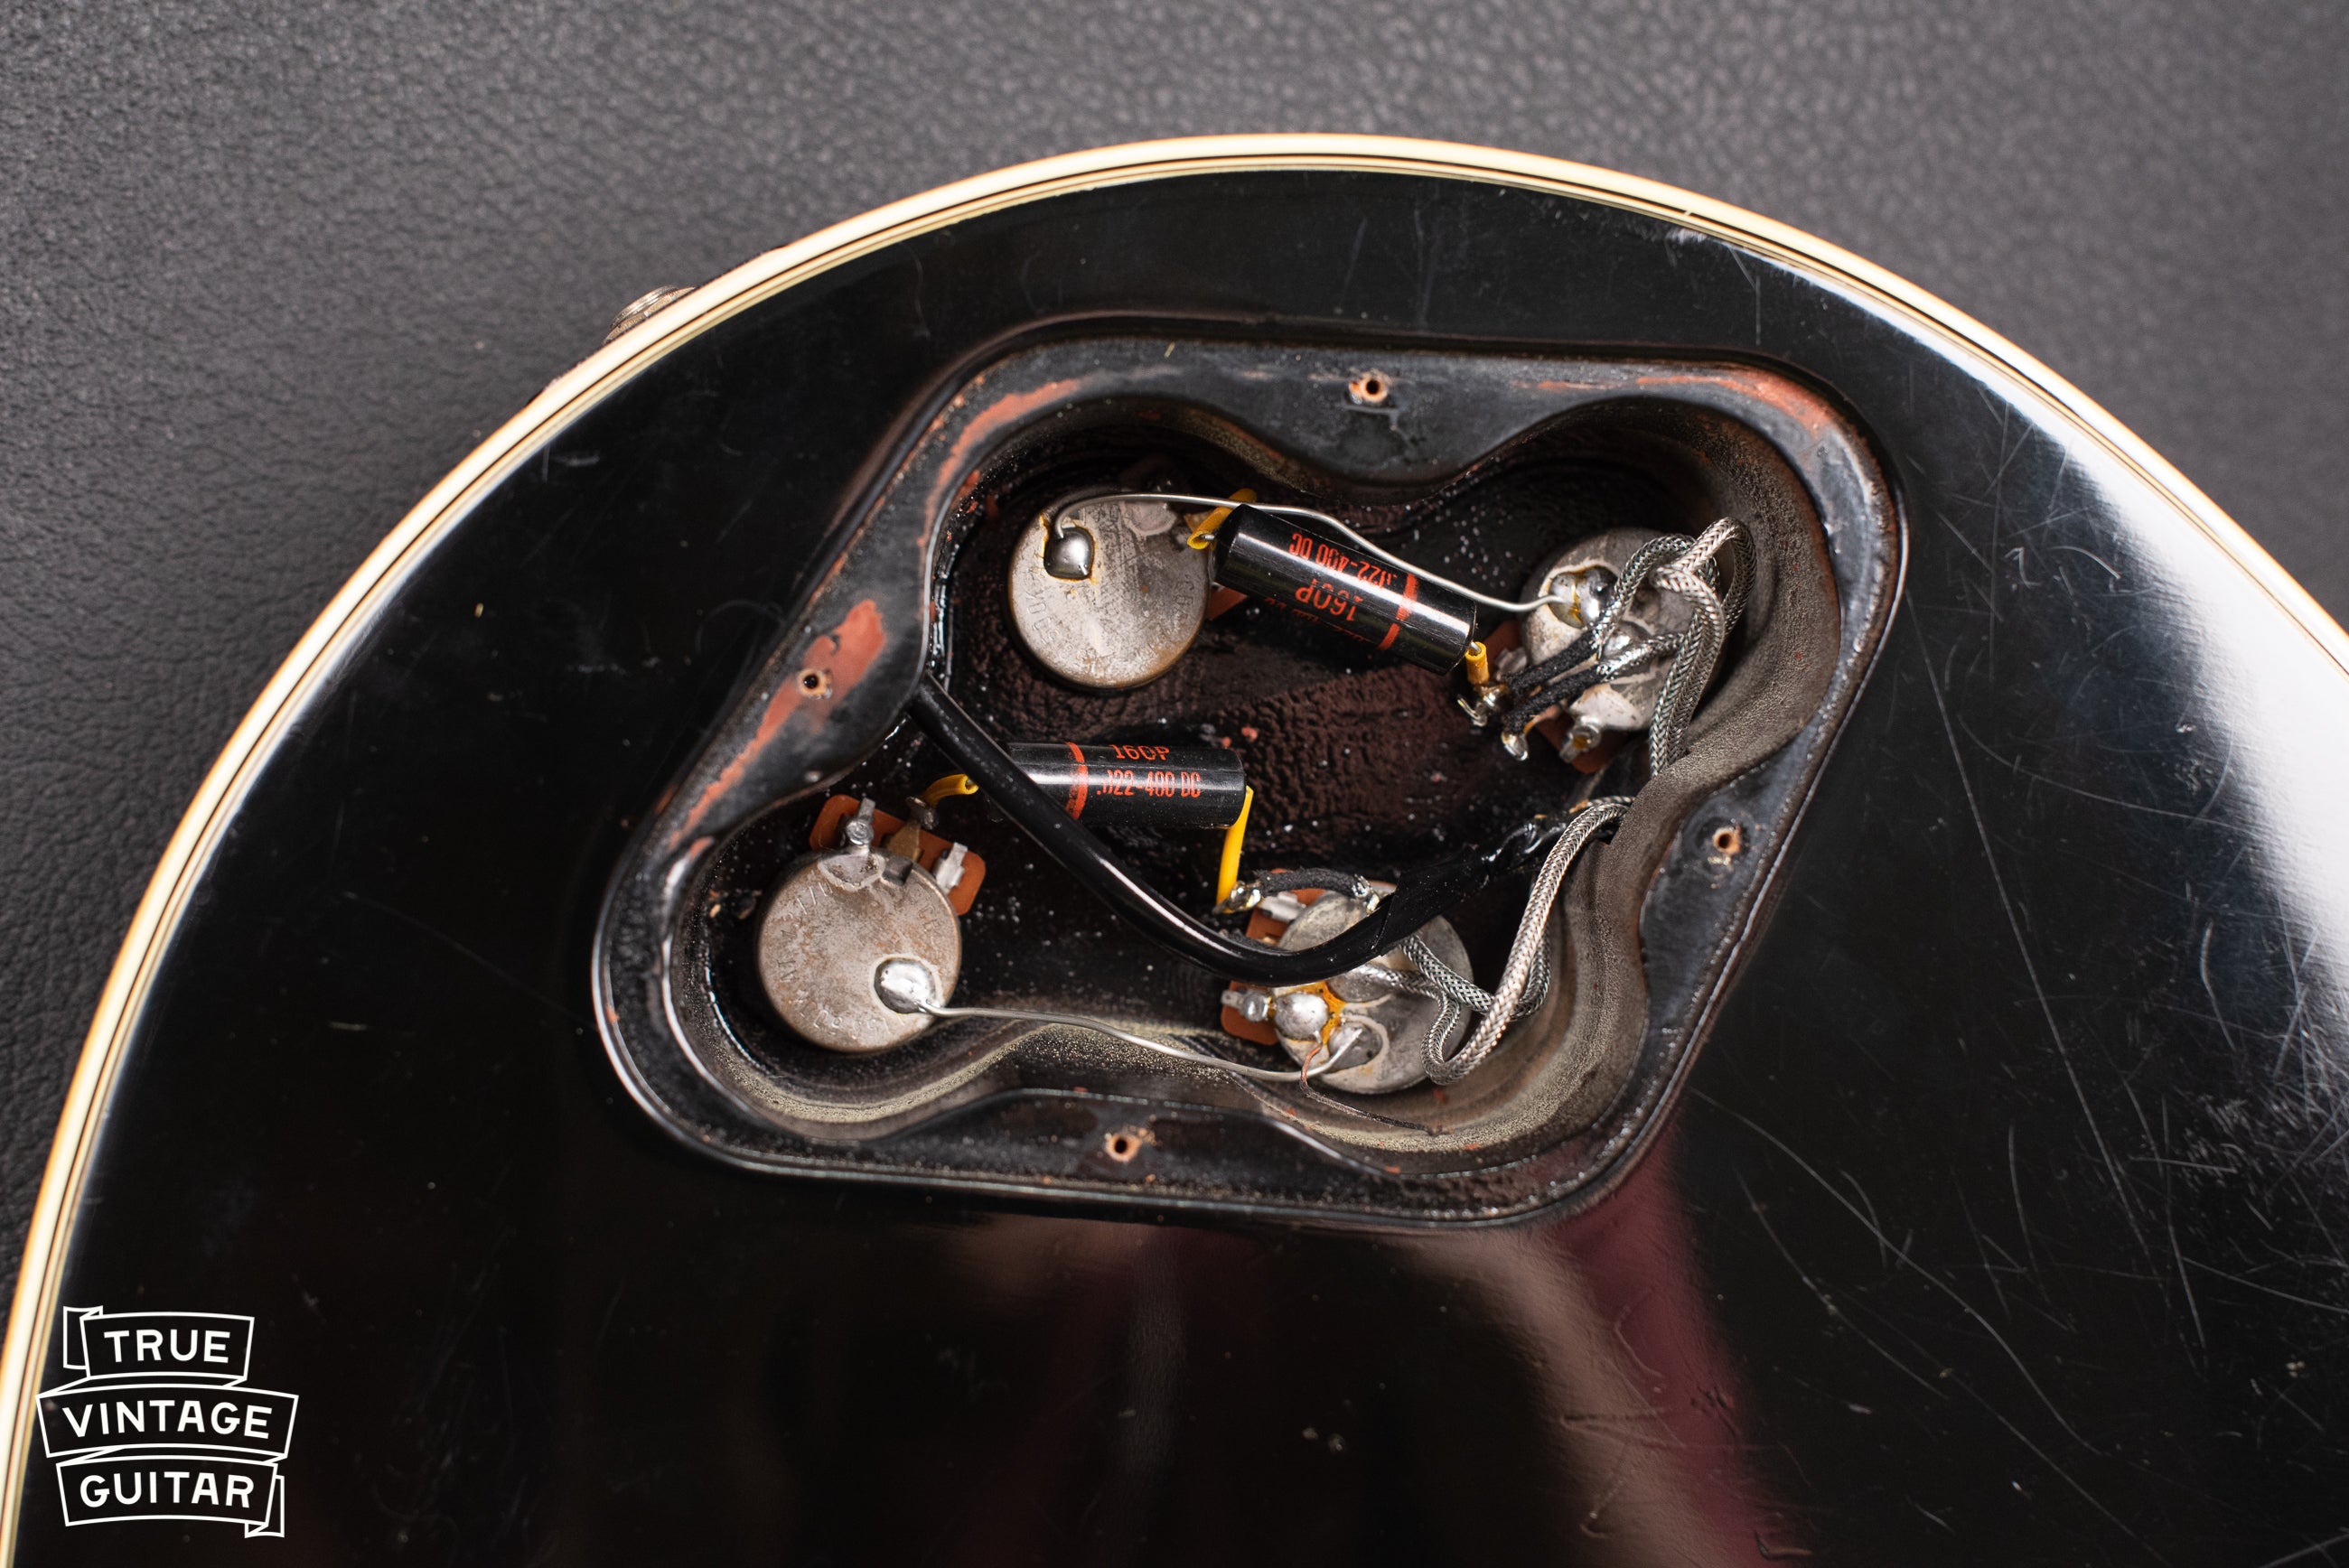 control cavity, potentiometers, black Sprague capacitors, 1970 Gibson Les Paul Custom